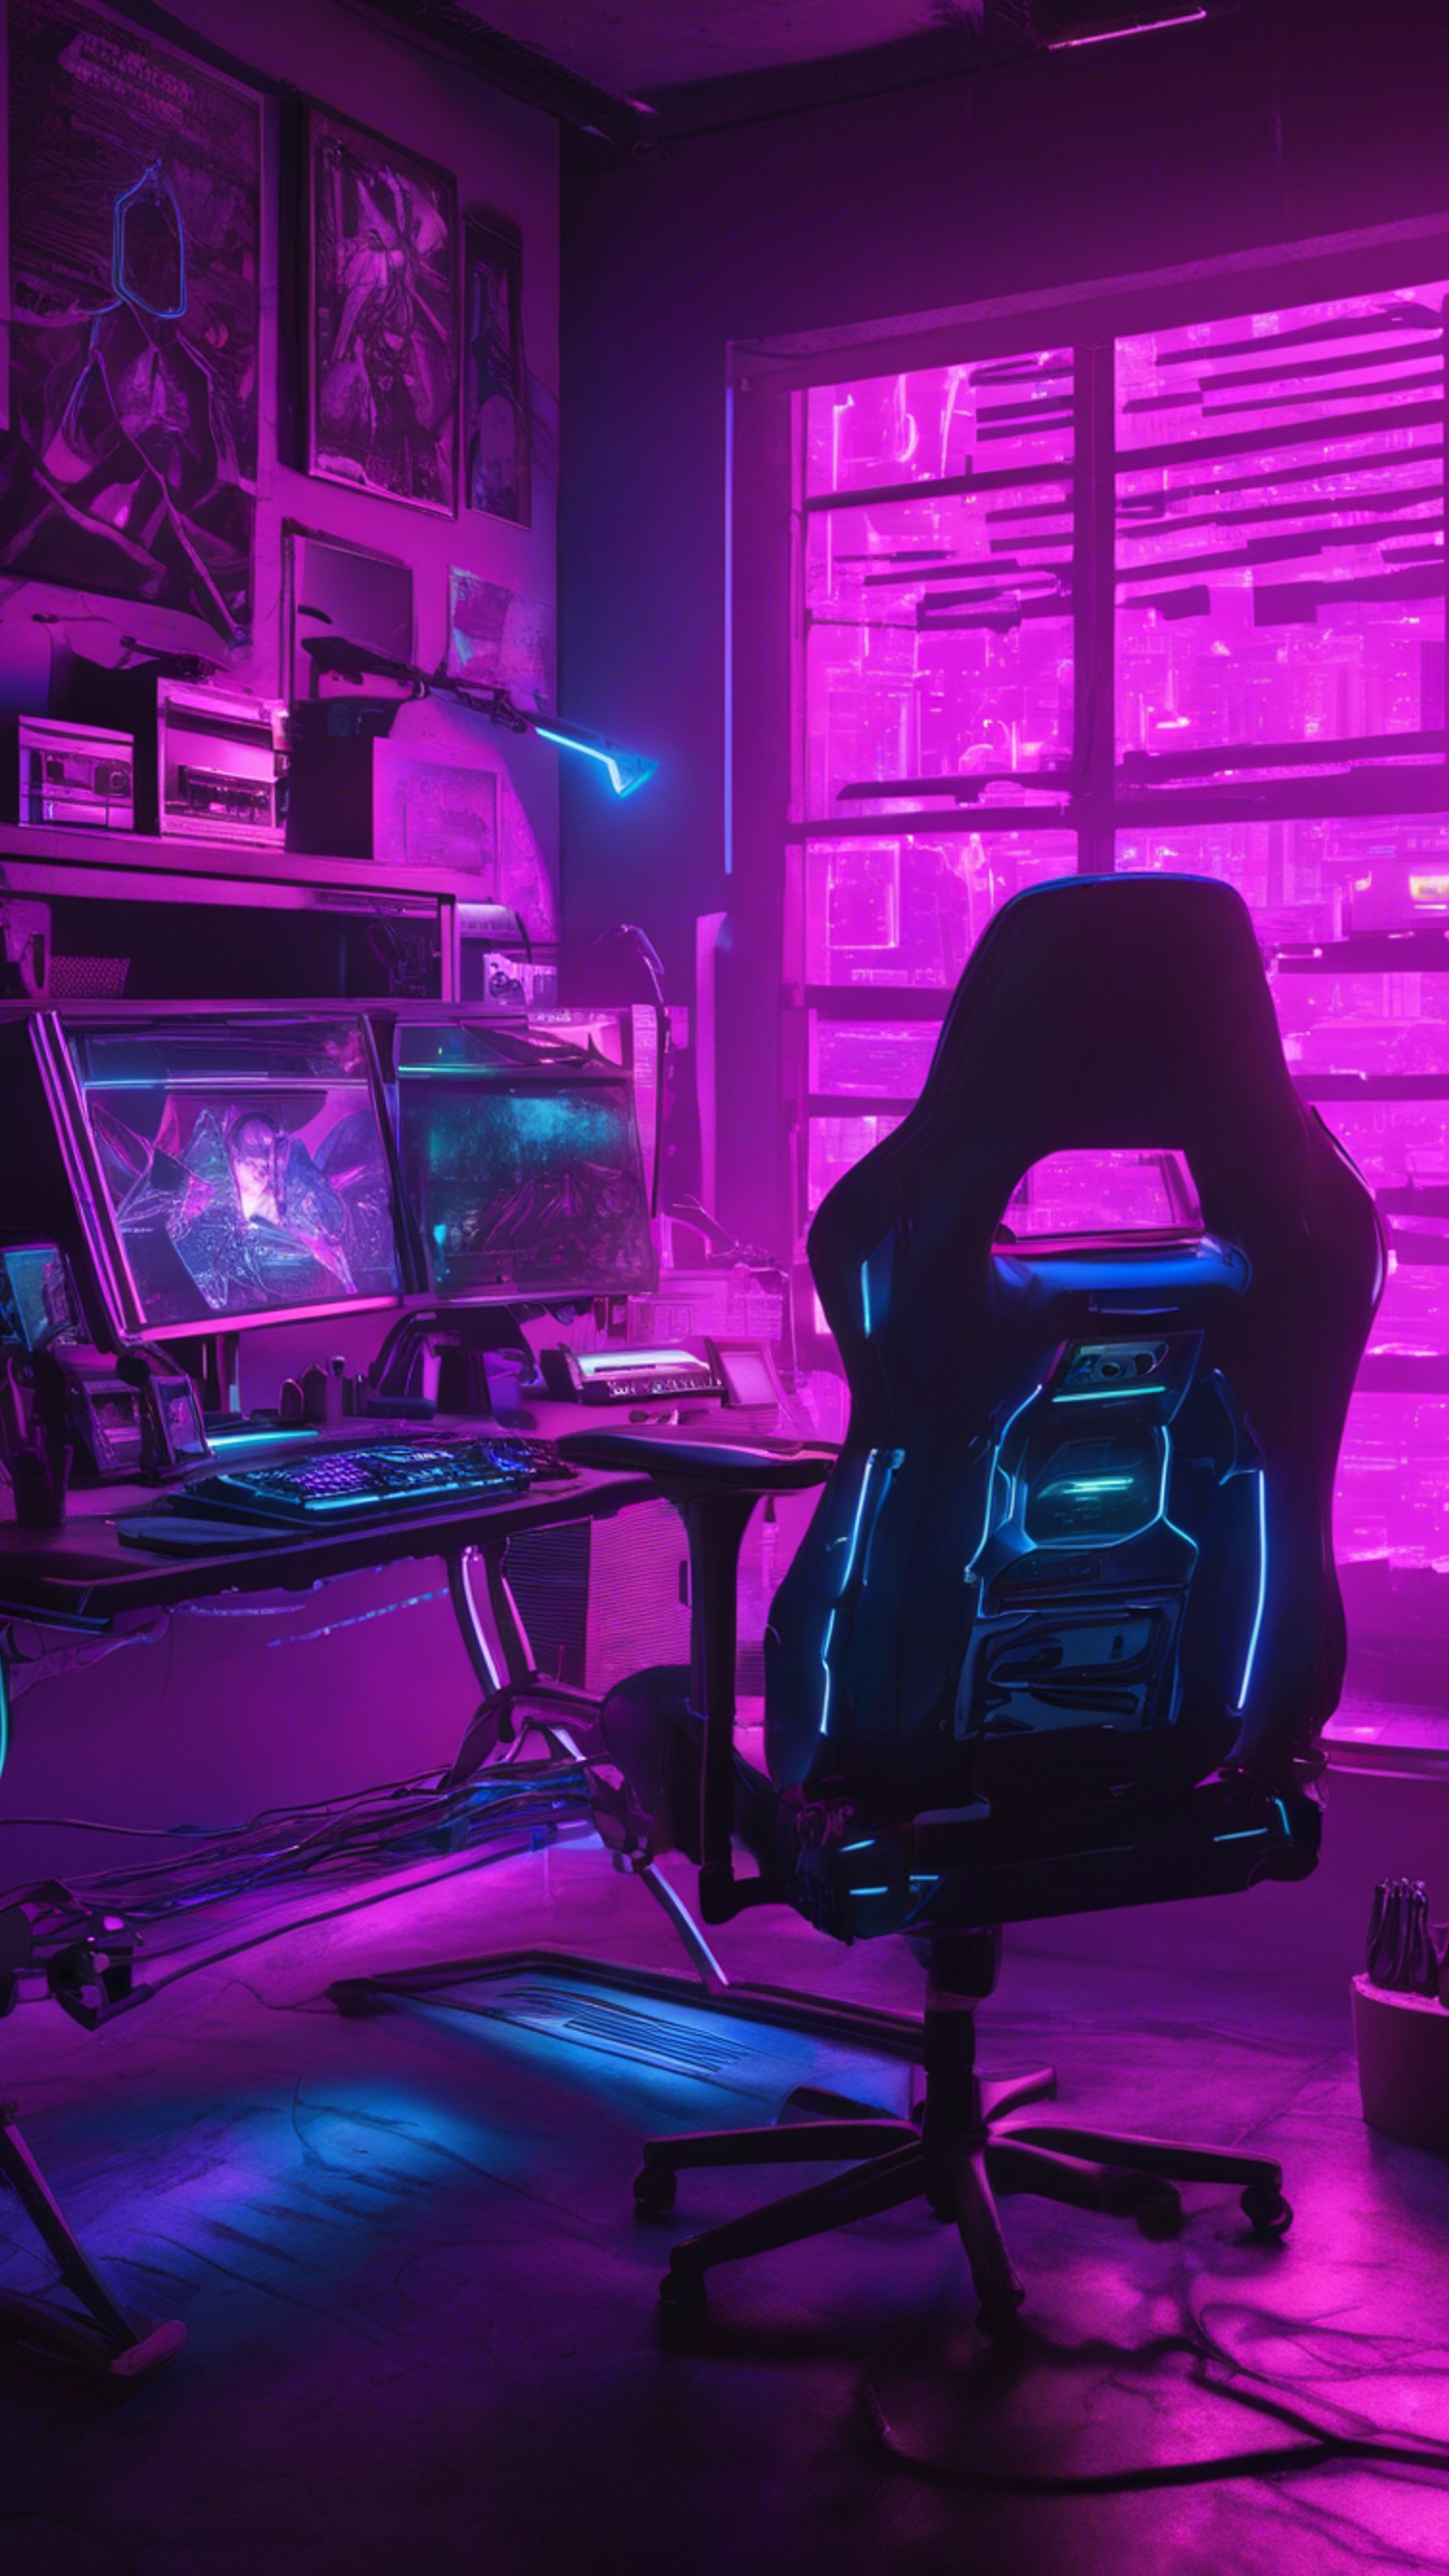 A modern gaming room lit with neon purple lights, showing an advanced gaming set up on a sleek desk. Tapéta[eb087c215e784f138c4c]